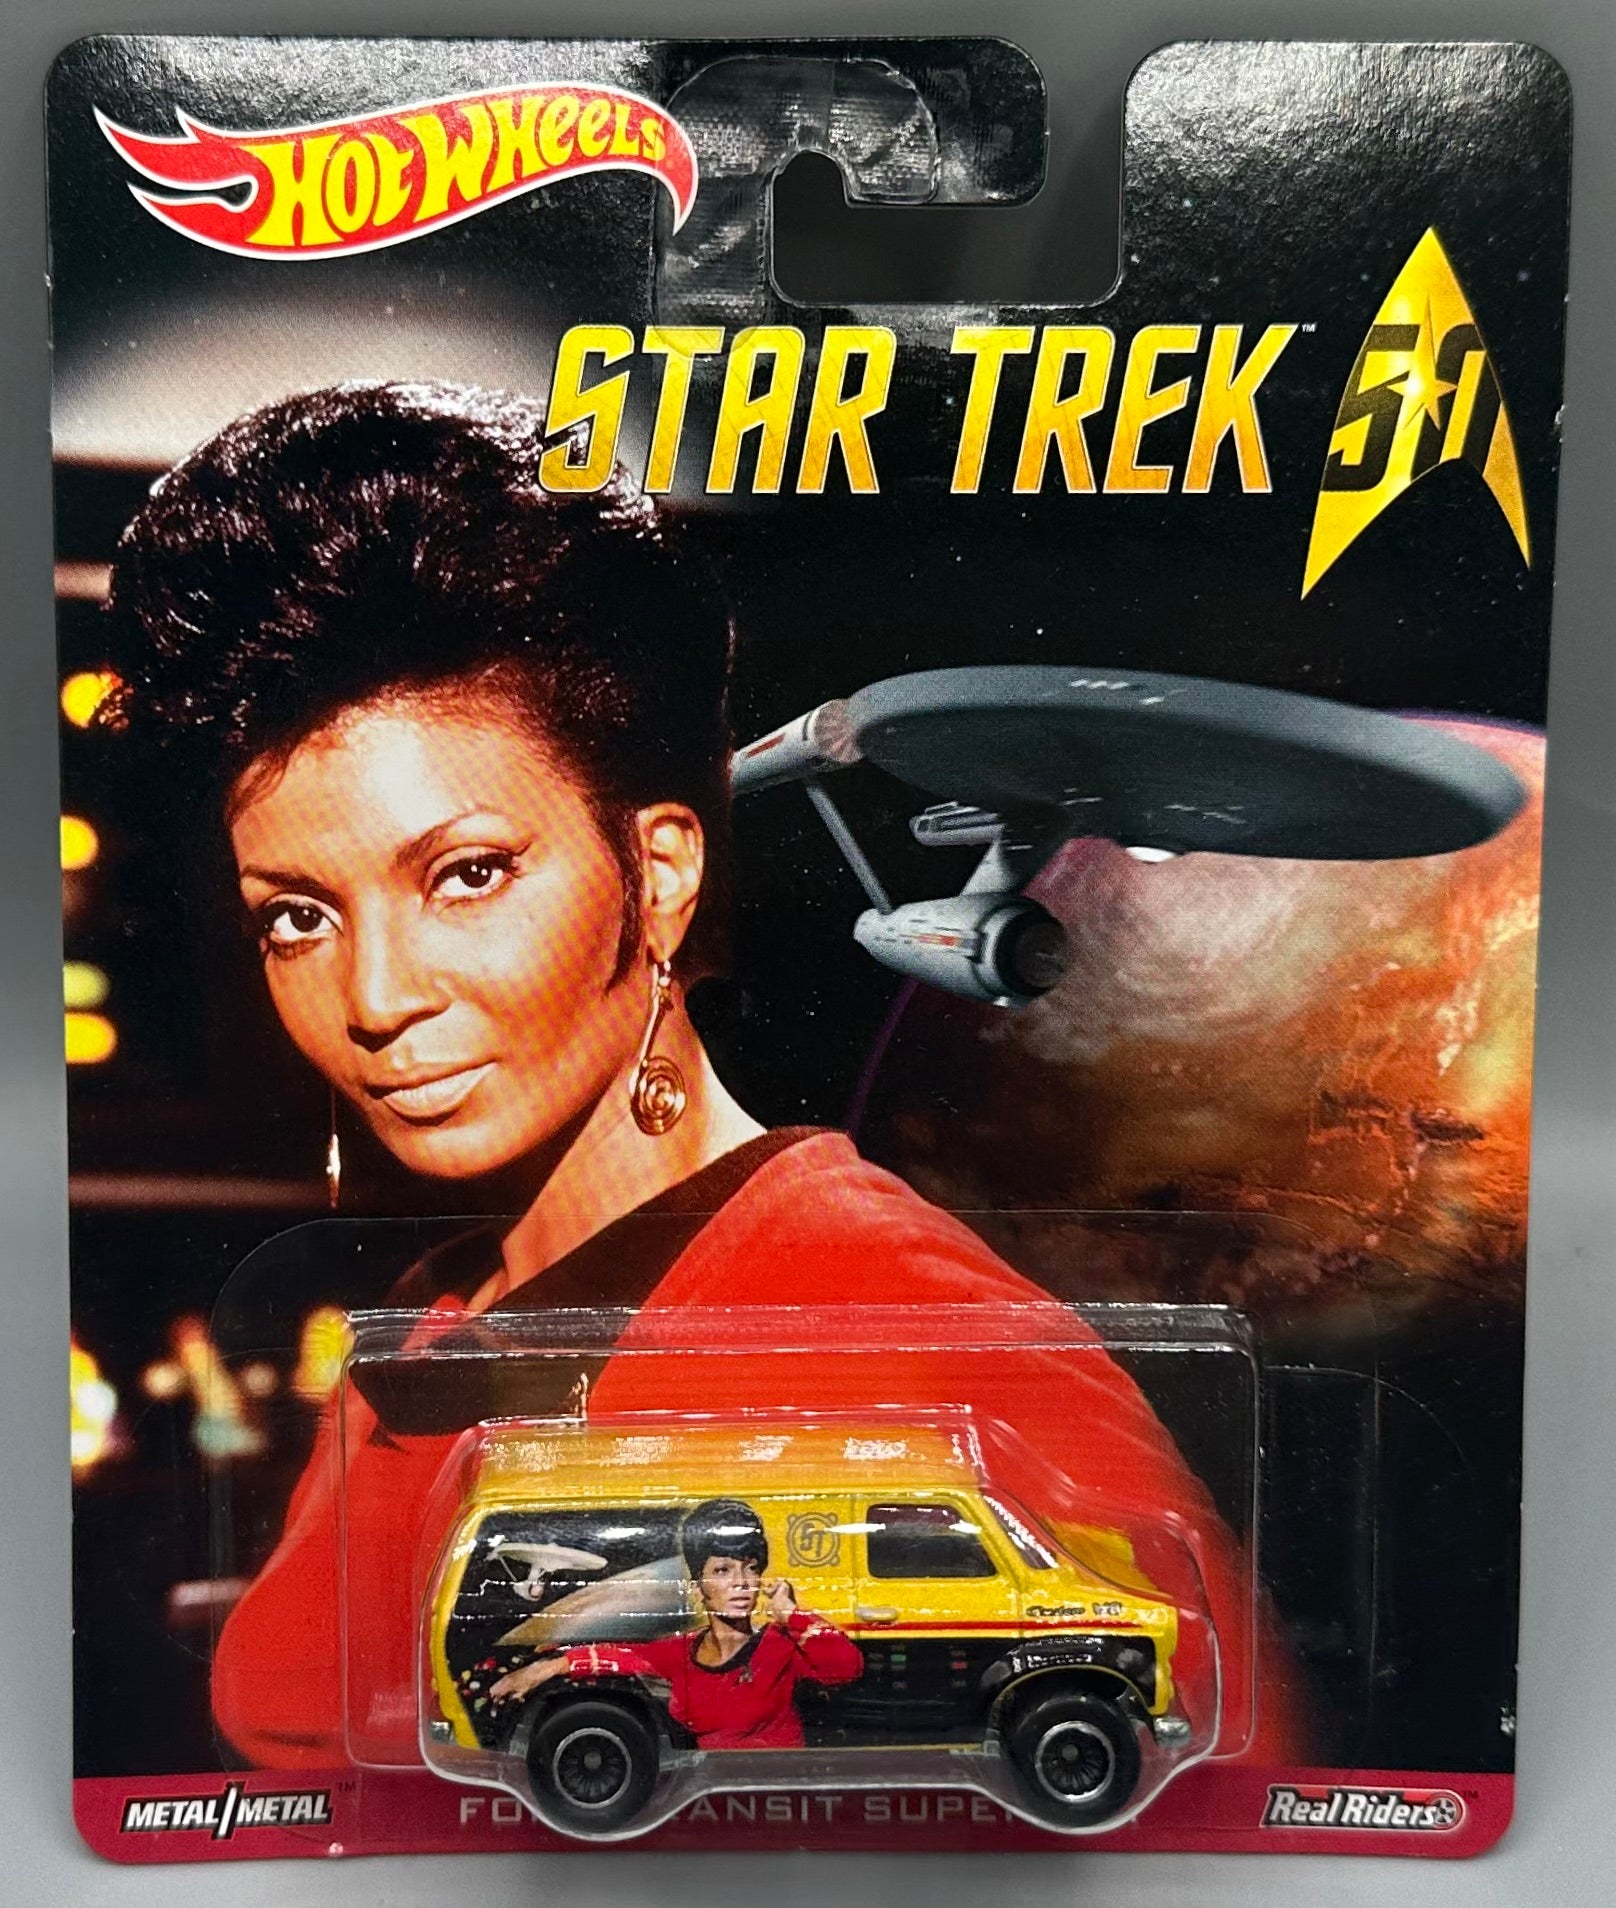 Hot Wheels Star Trek Ford Transit Supervan | HW Models Ltd